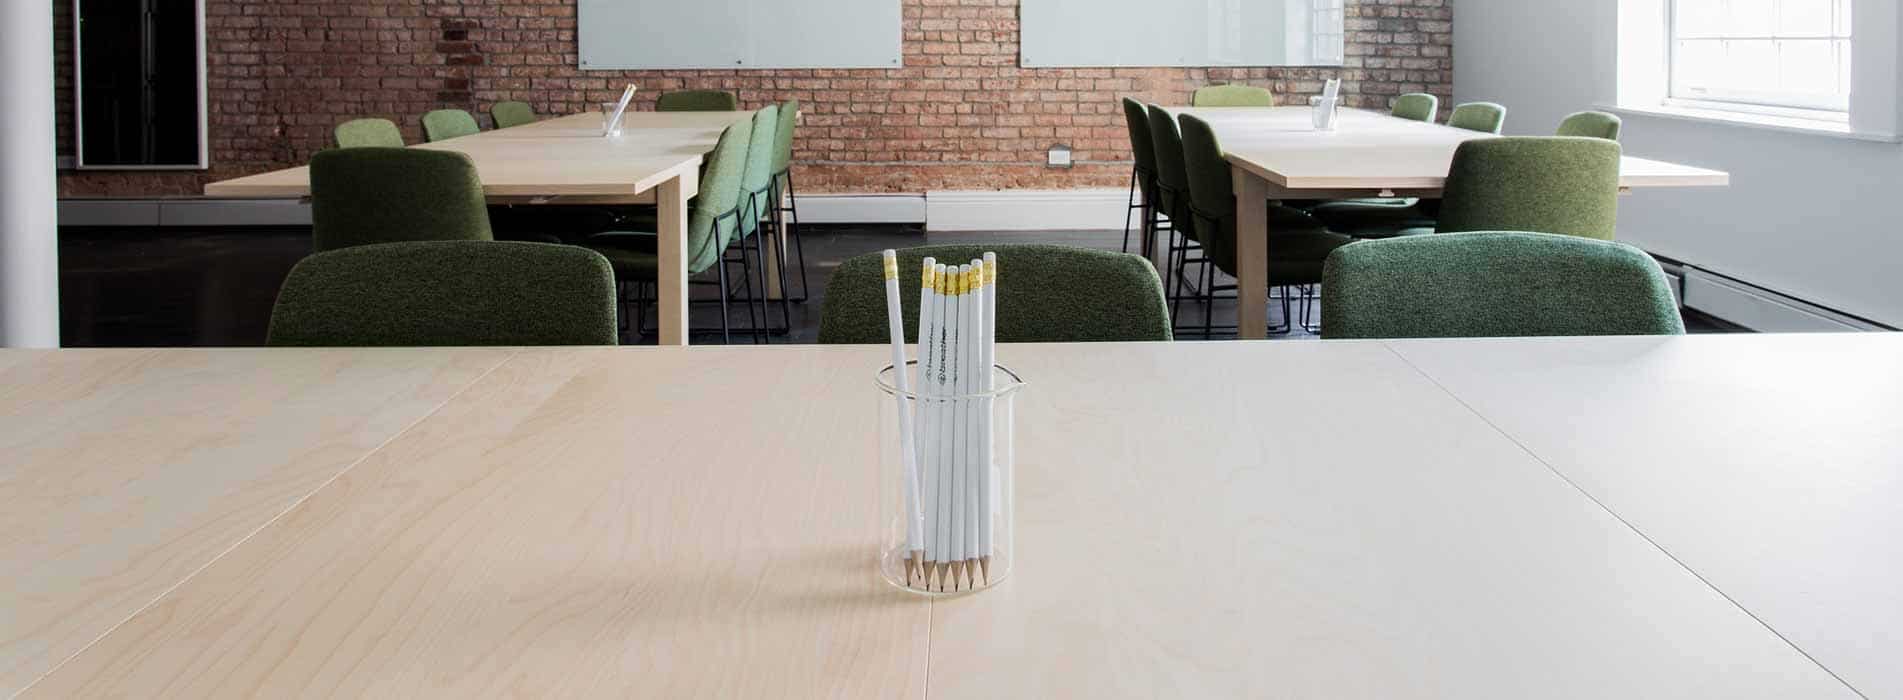 Science Shepherd homeschool co-op classroom with open chairs and jar of pencils